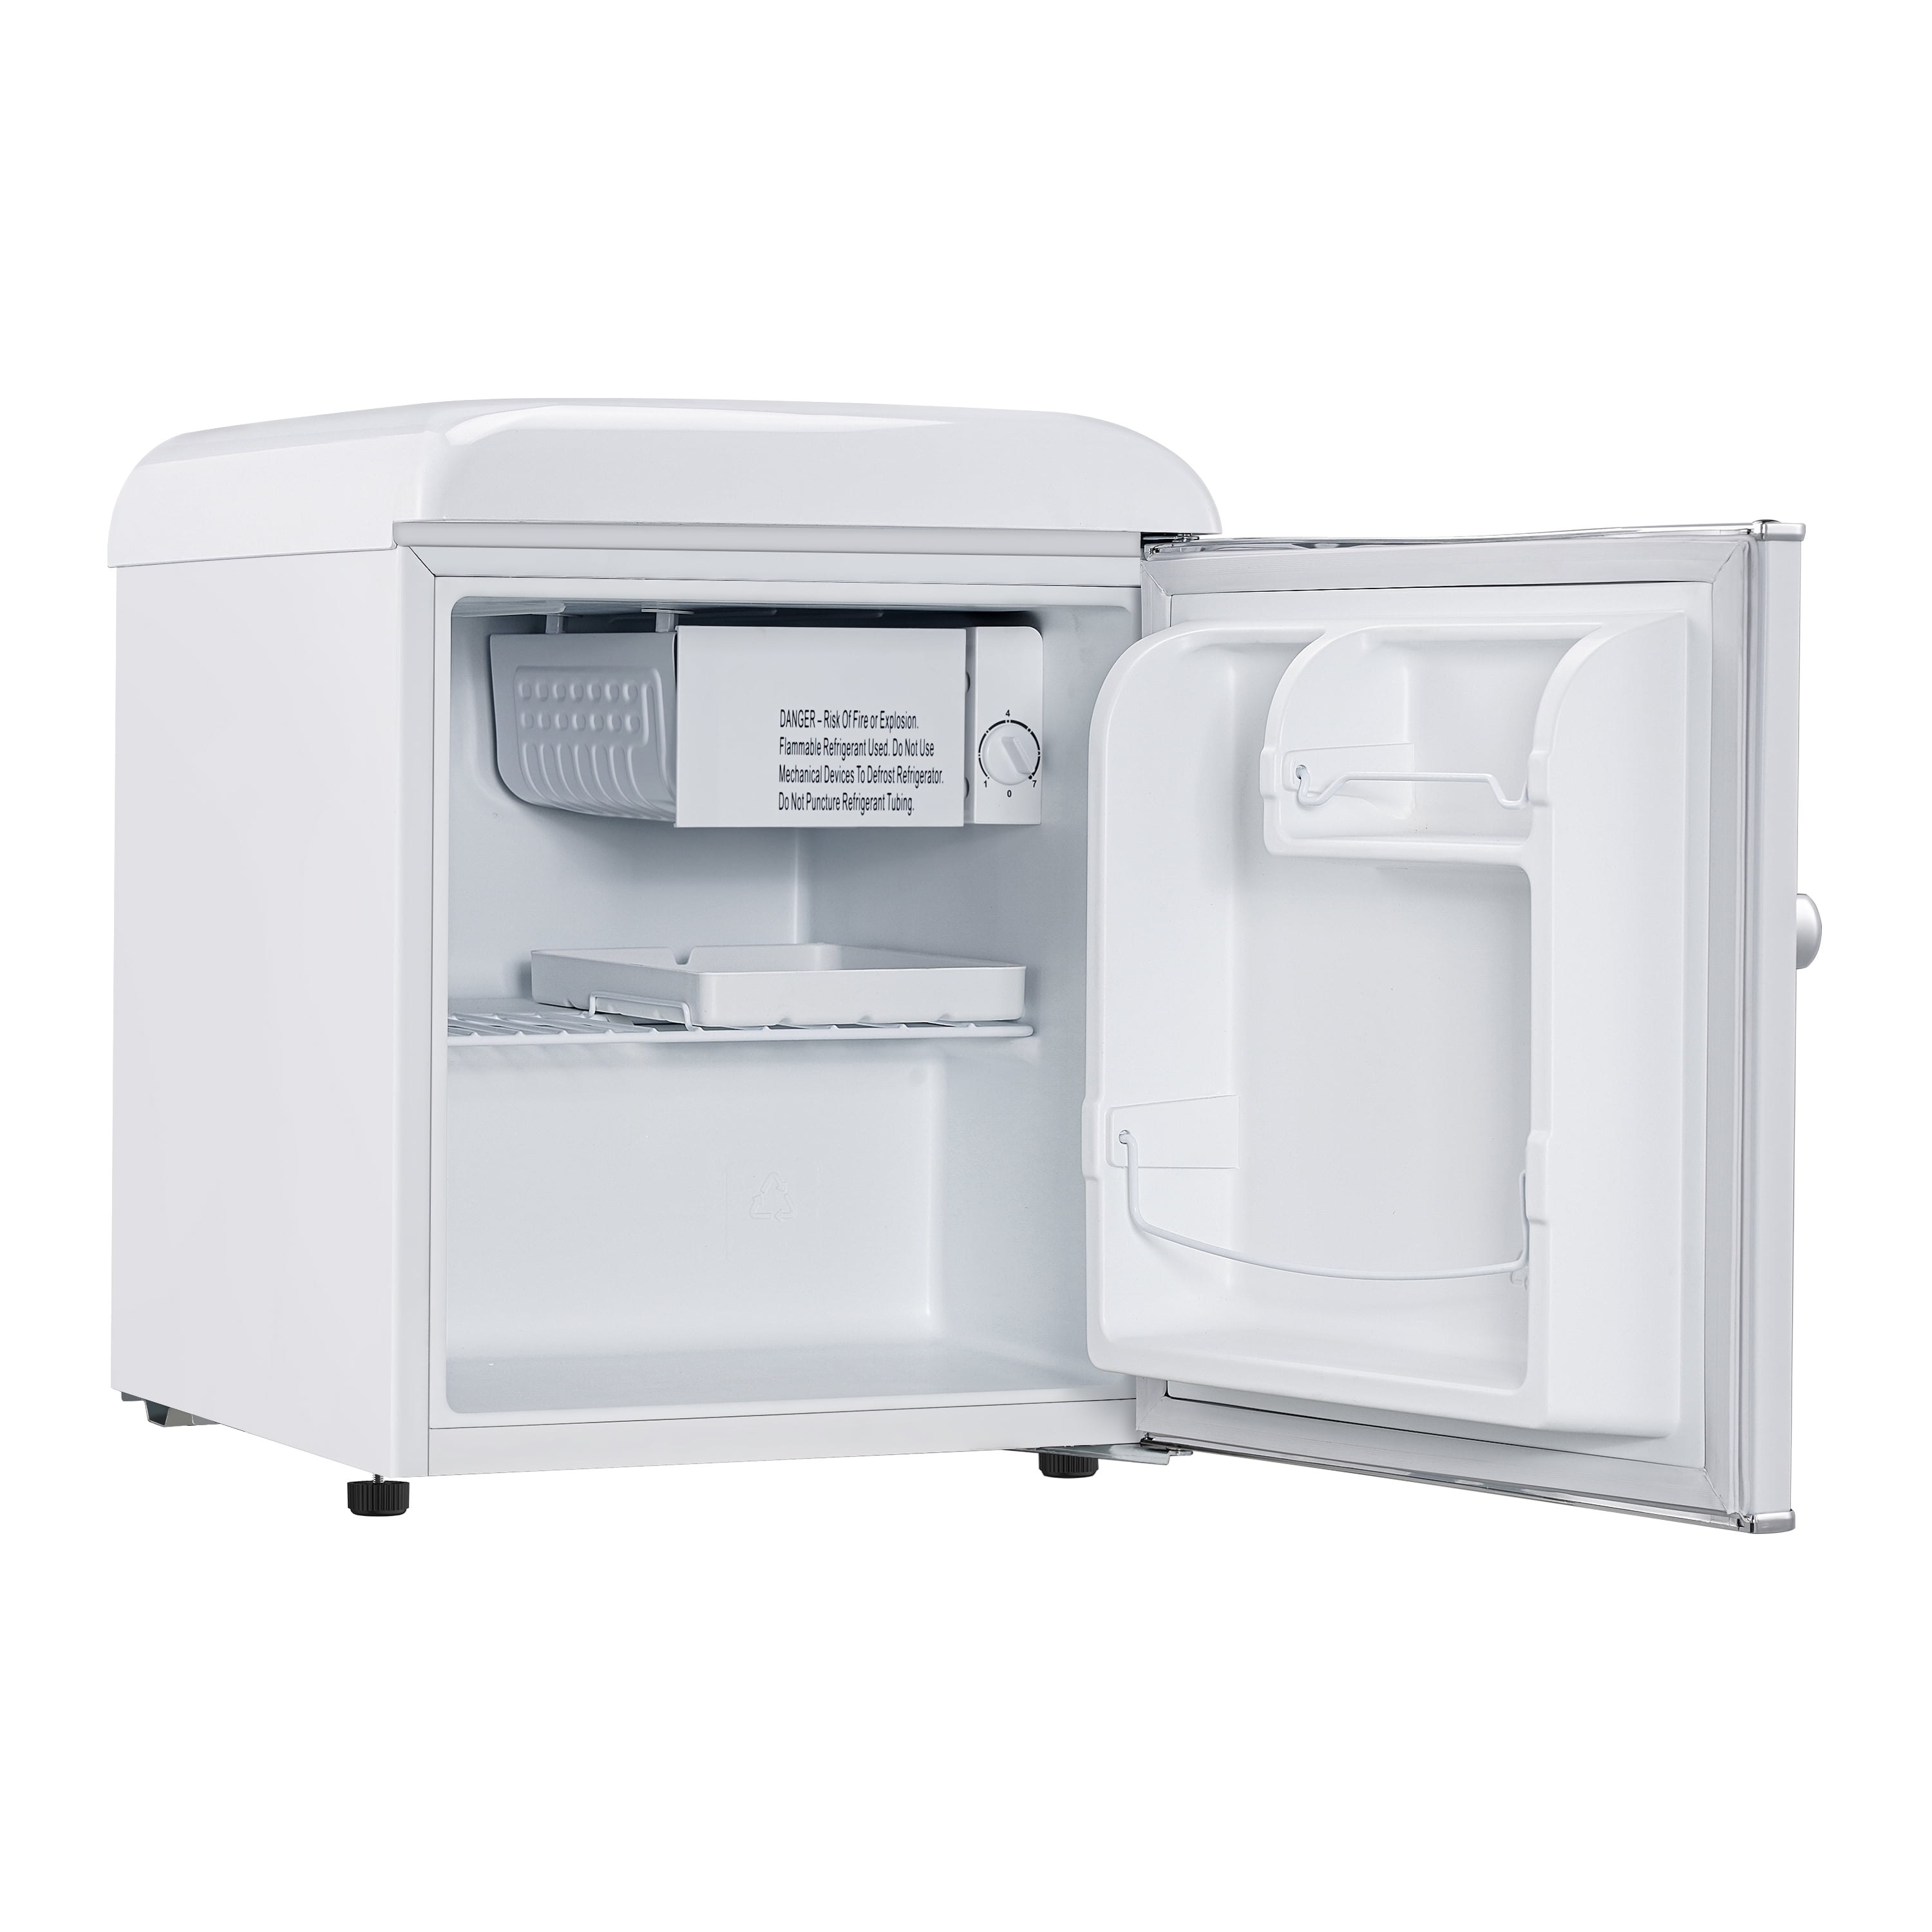 Galanz Retro dual door 4-cu ft Standard-depth Freestanding Mini Fridge  Freezer Compartment (White) ENERGY STAR in the Mini Fridges department at